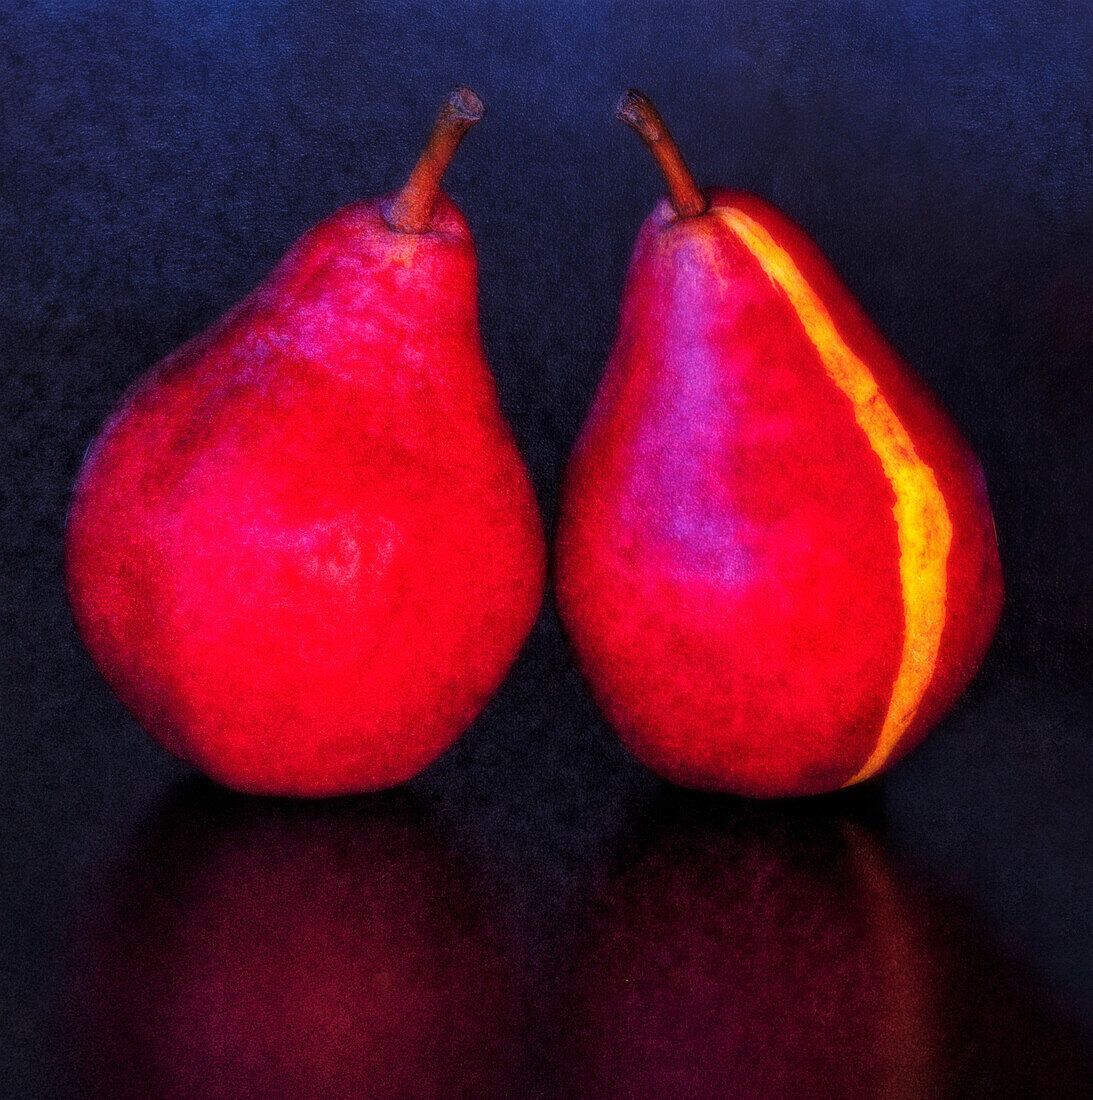 USA, Oregon, Coos Bay. Pair of Starkrimson pears